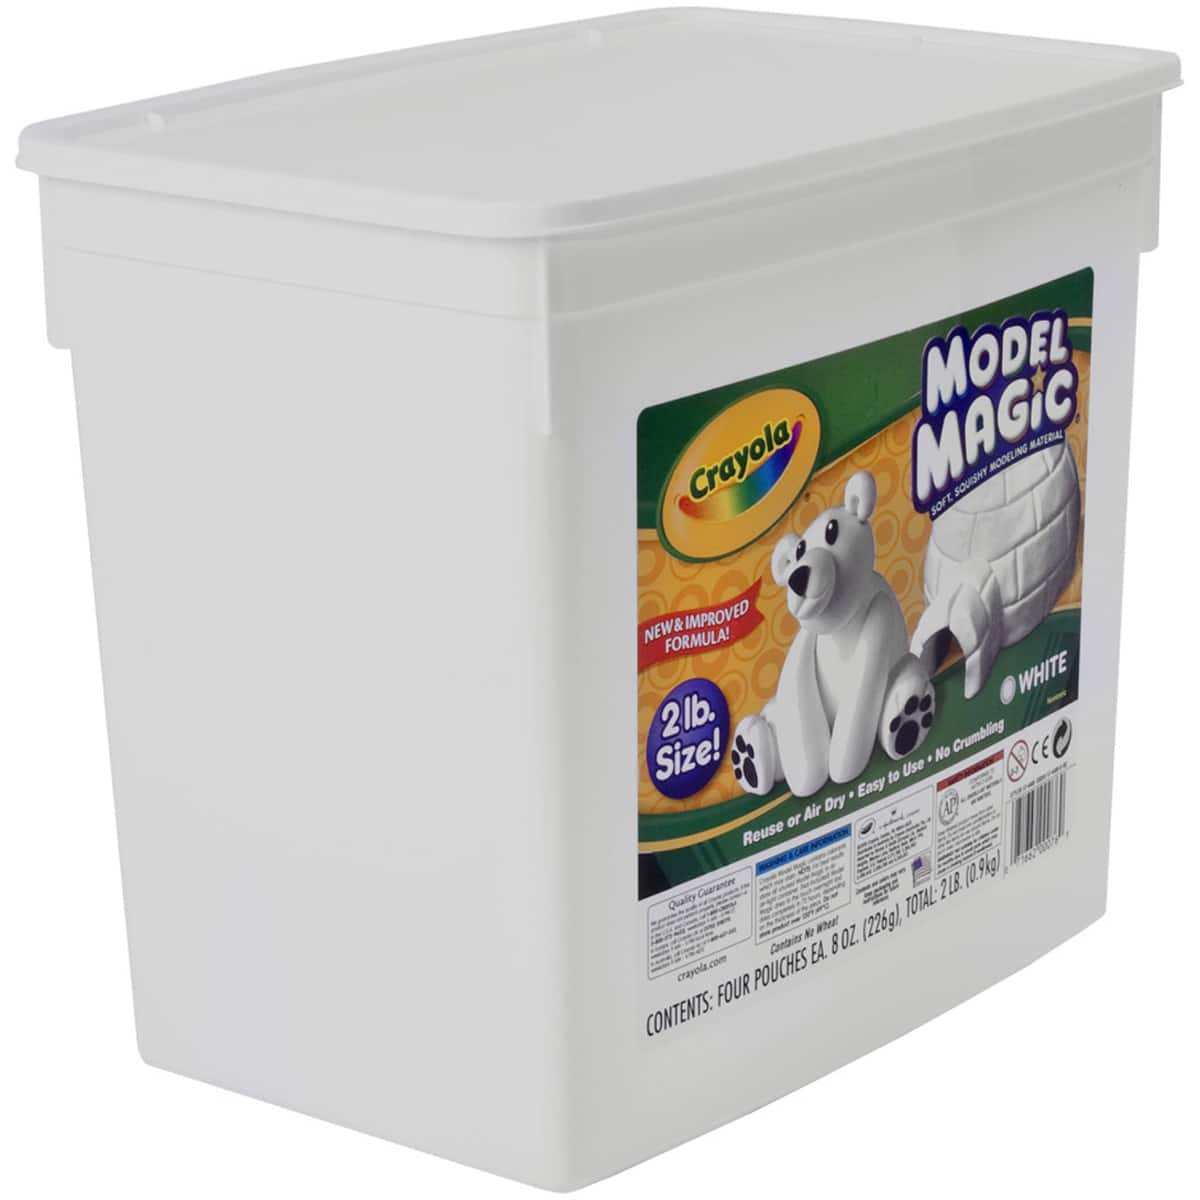 8 Pack: Crayola® 2lb. Model Magic® White Bucket